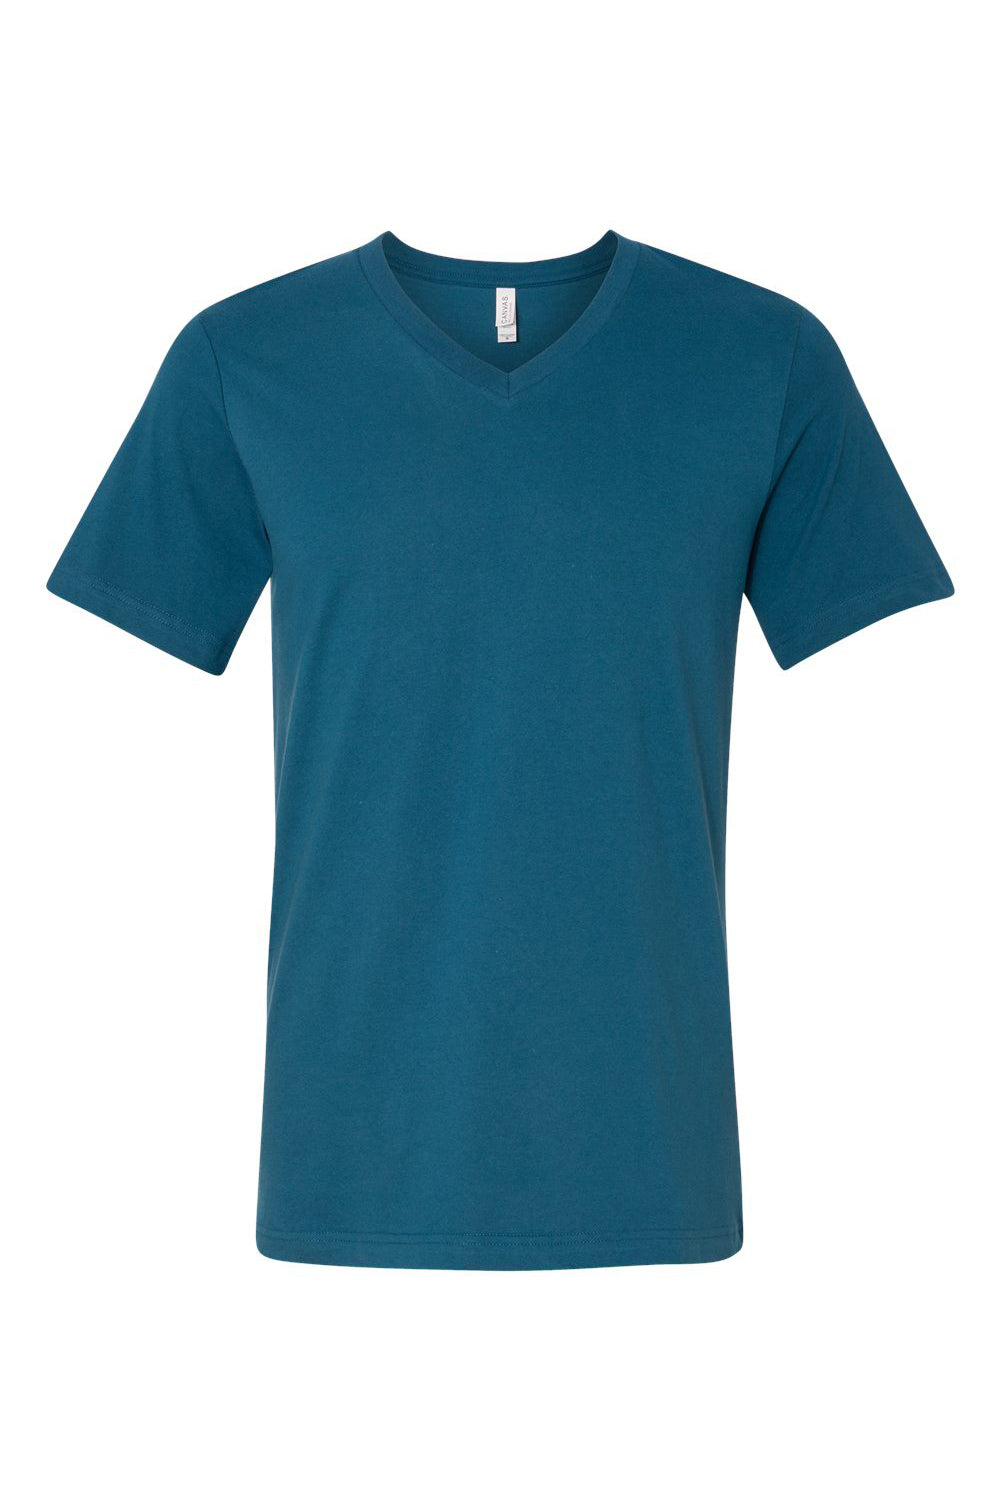 Bella + Canvas BC3005/3005/3655C Mens Jersey Short Sleeve V-Neck T-Shirt Deep Teal Blue Flat Front